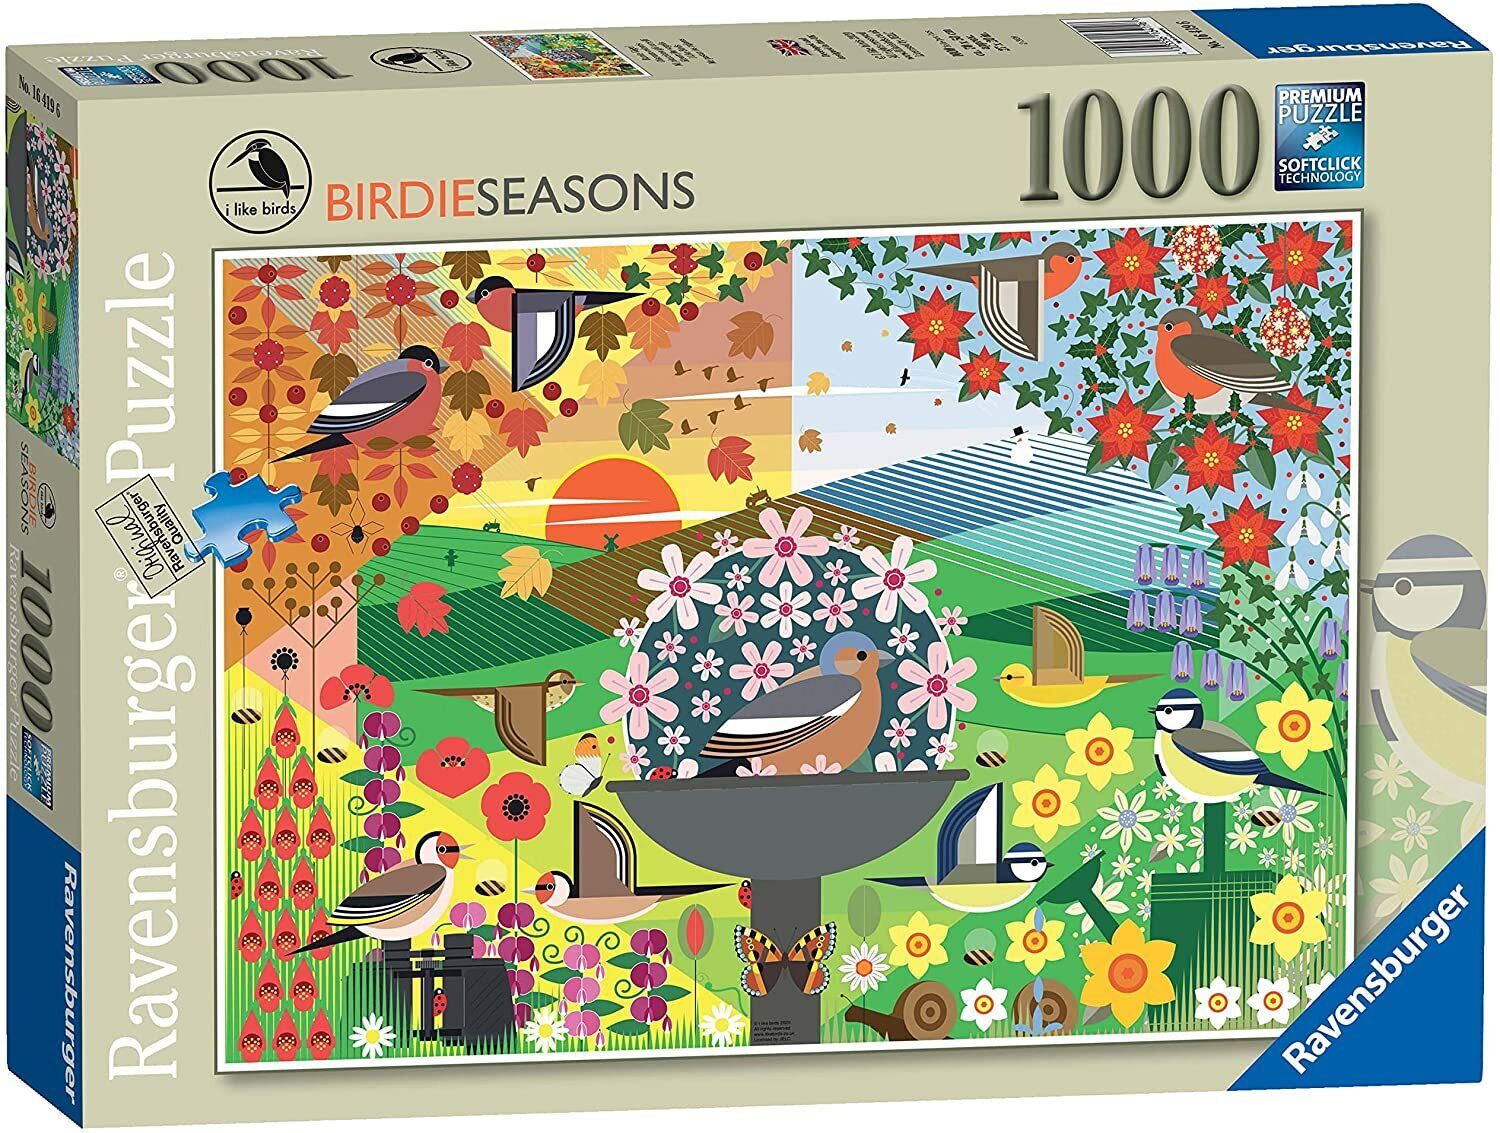 Ravensburger I Like Birds Birdie Seasons 1000 Piece Puzzle - Brand New!